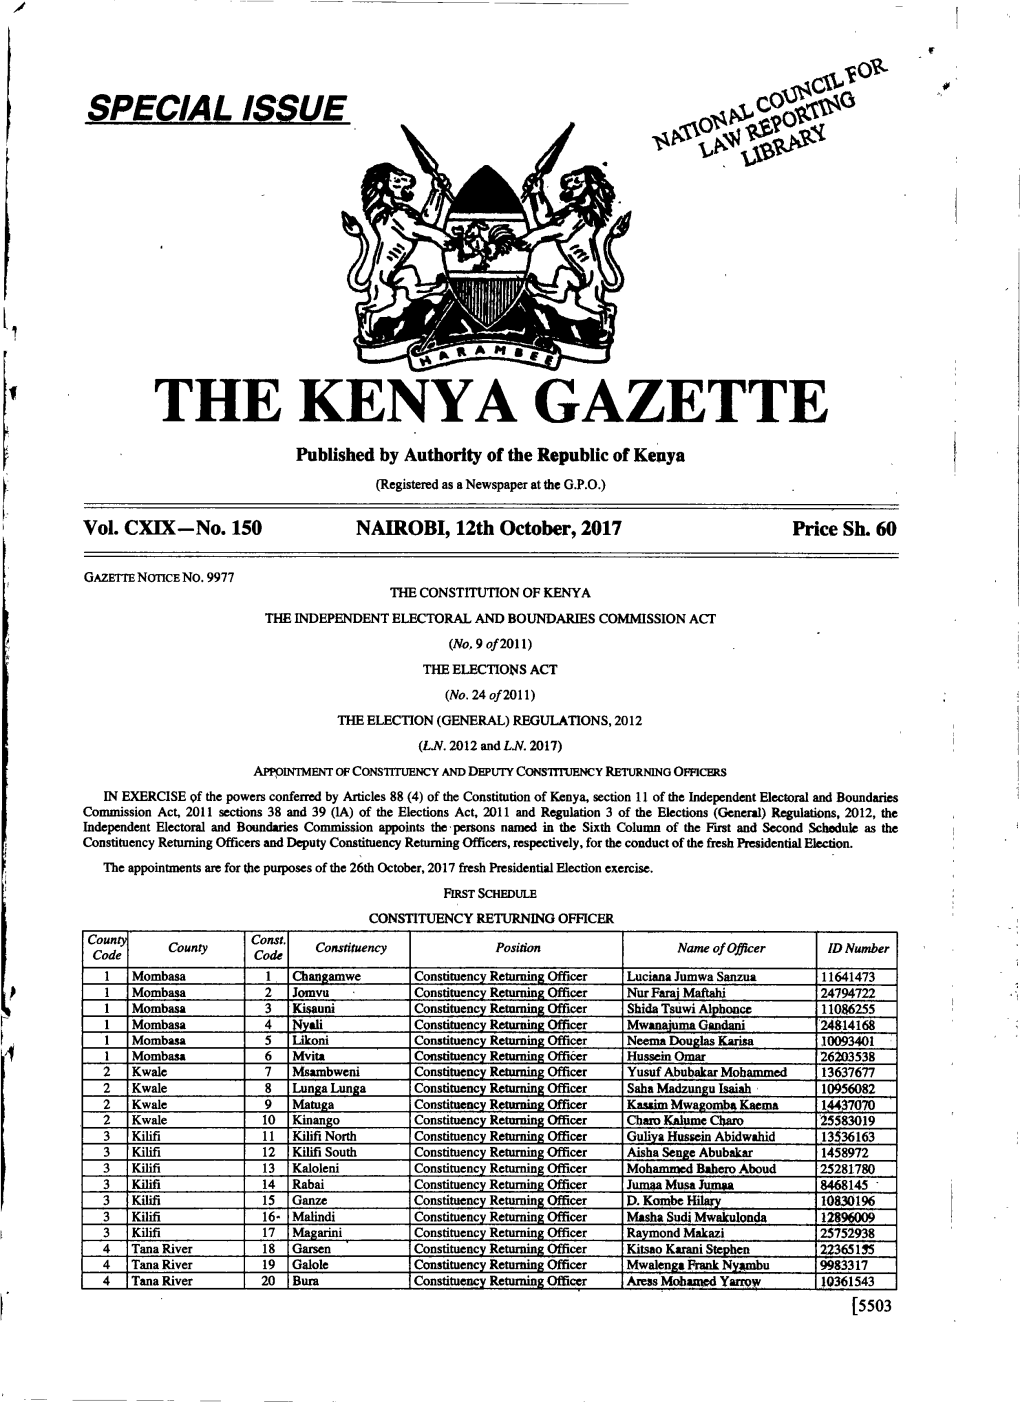 Kenya Gazette Notice 9977 Vol. CXIX Dated October 12, 2017